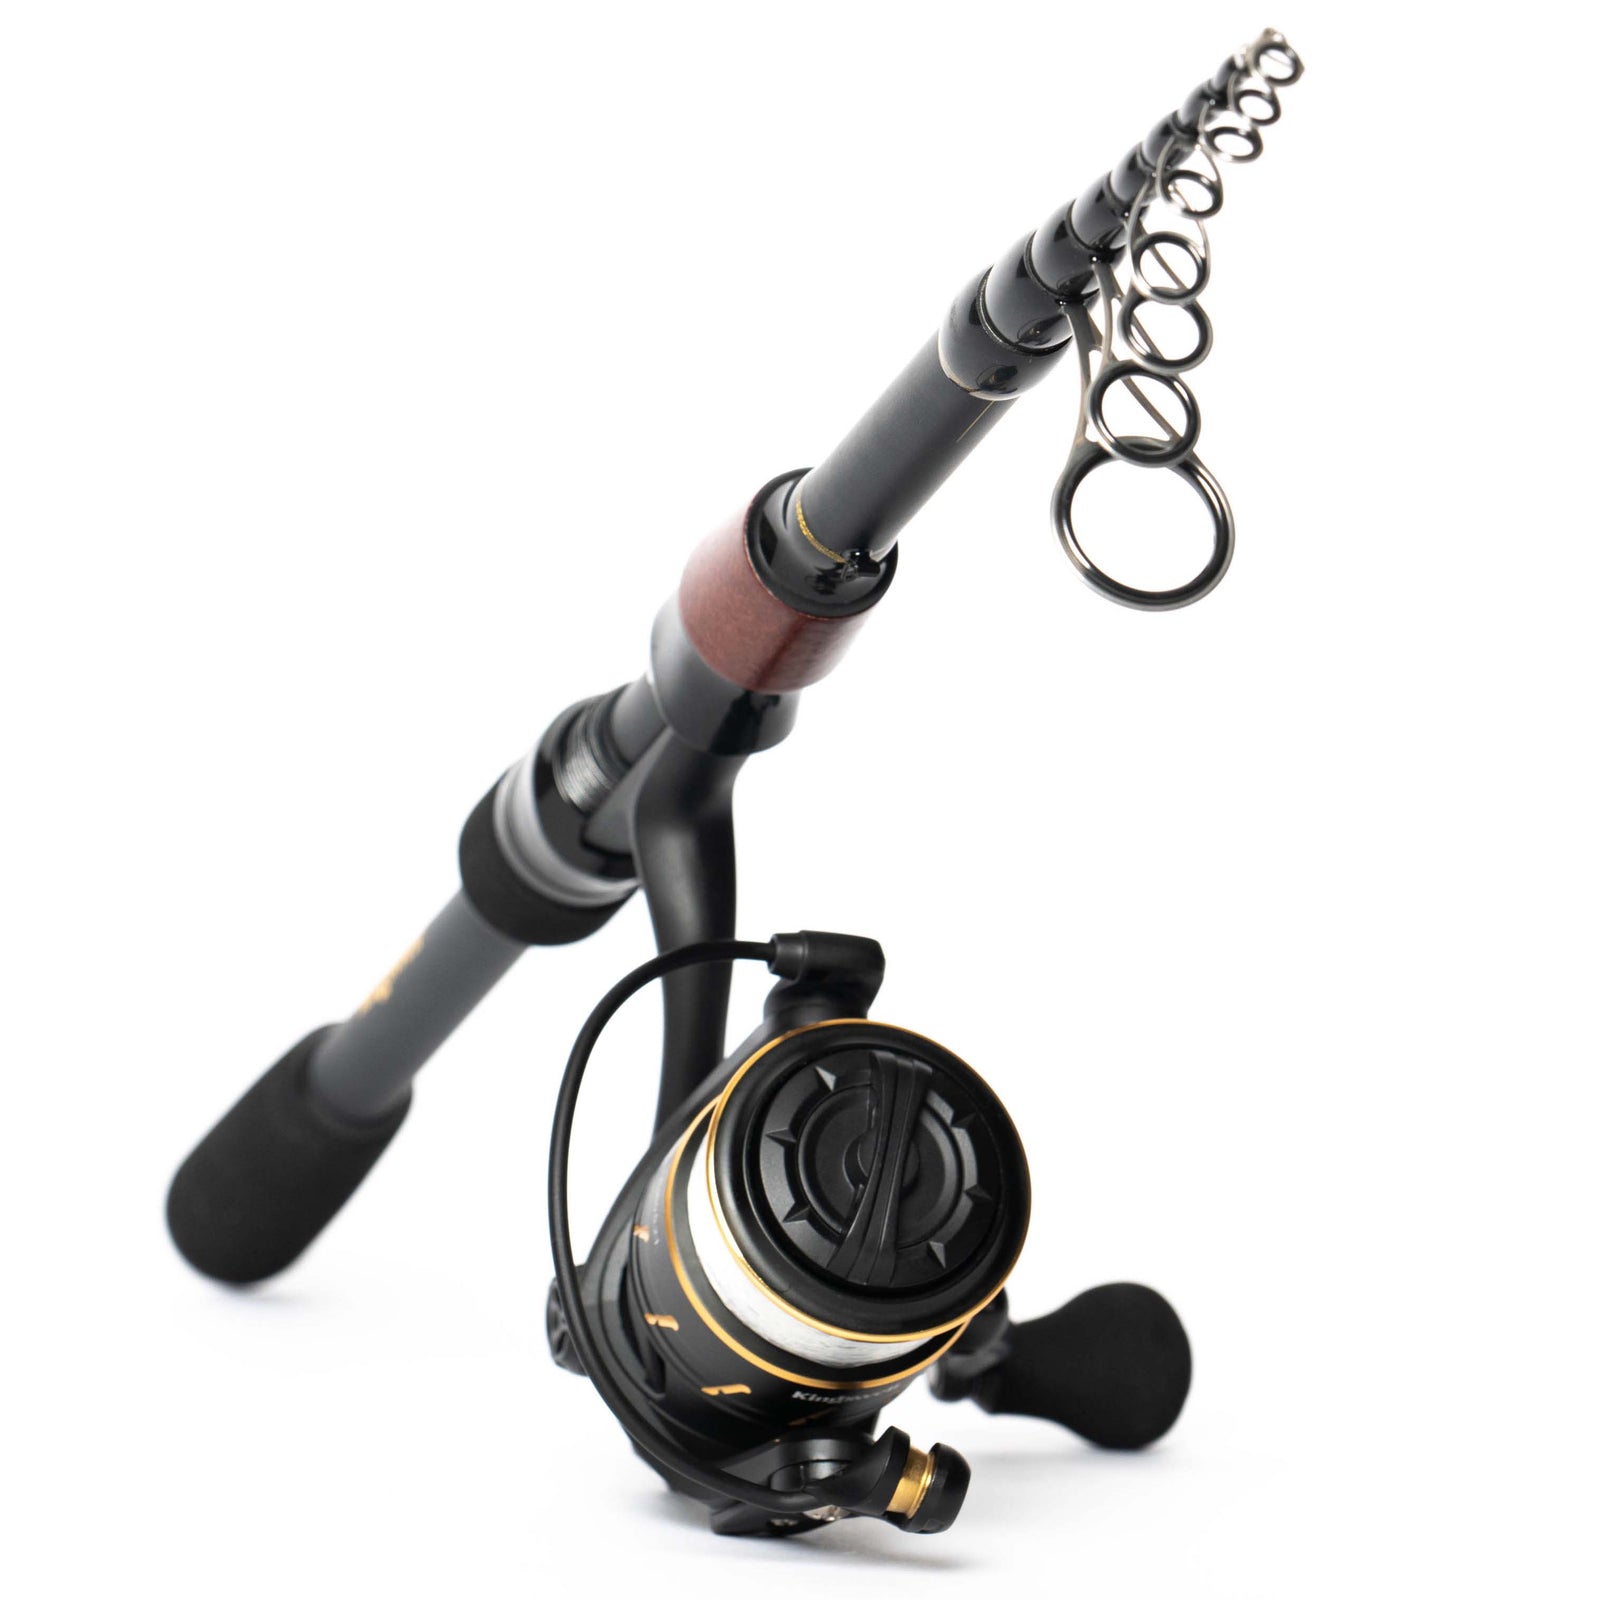 KINGSWELL Telescopic Fishing Rod and Reel Combo, Premium